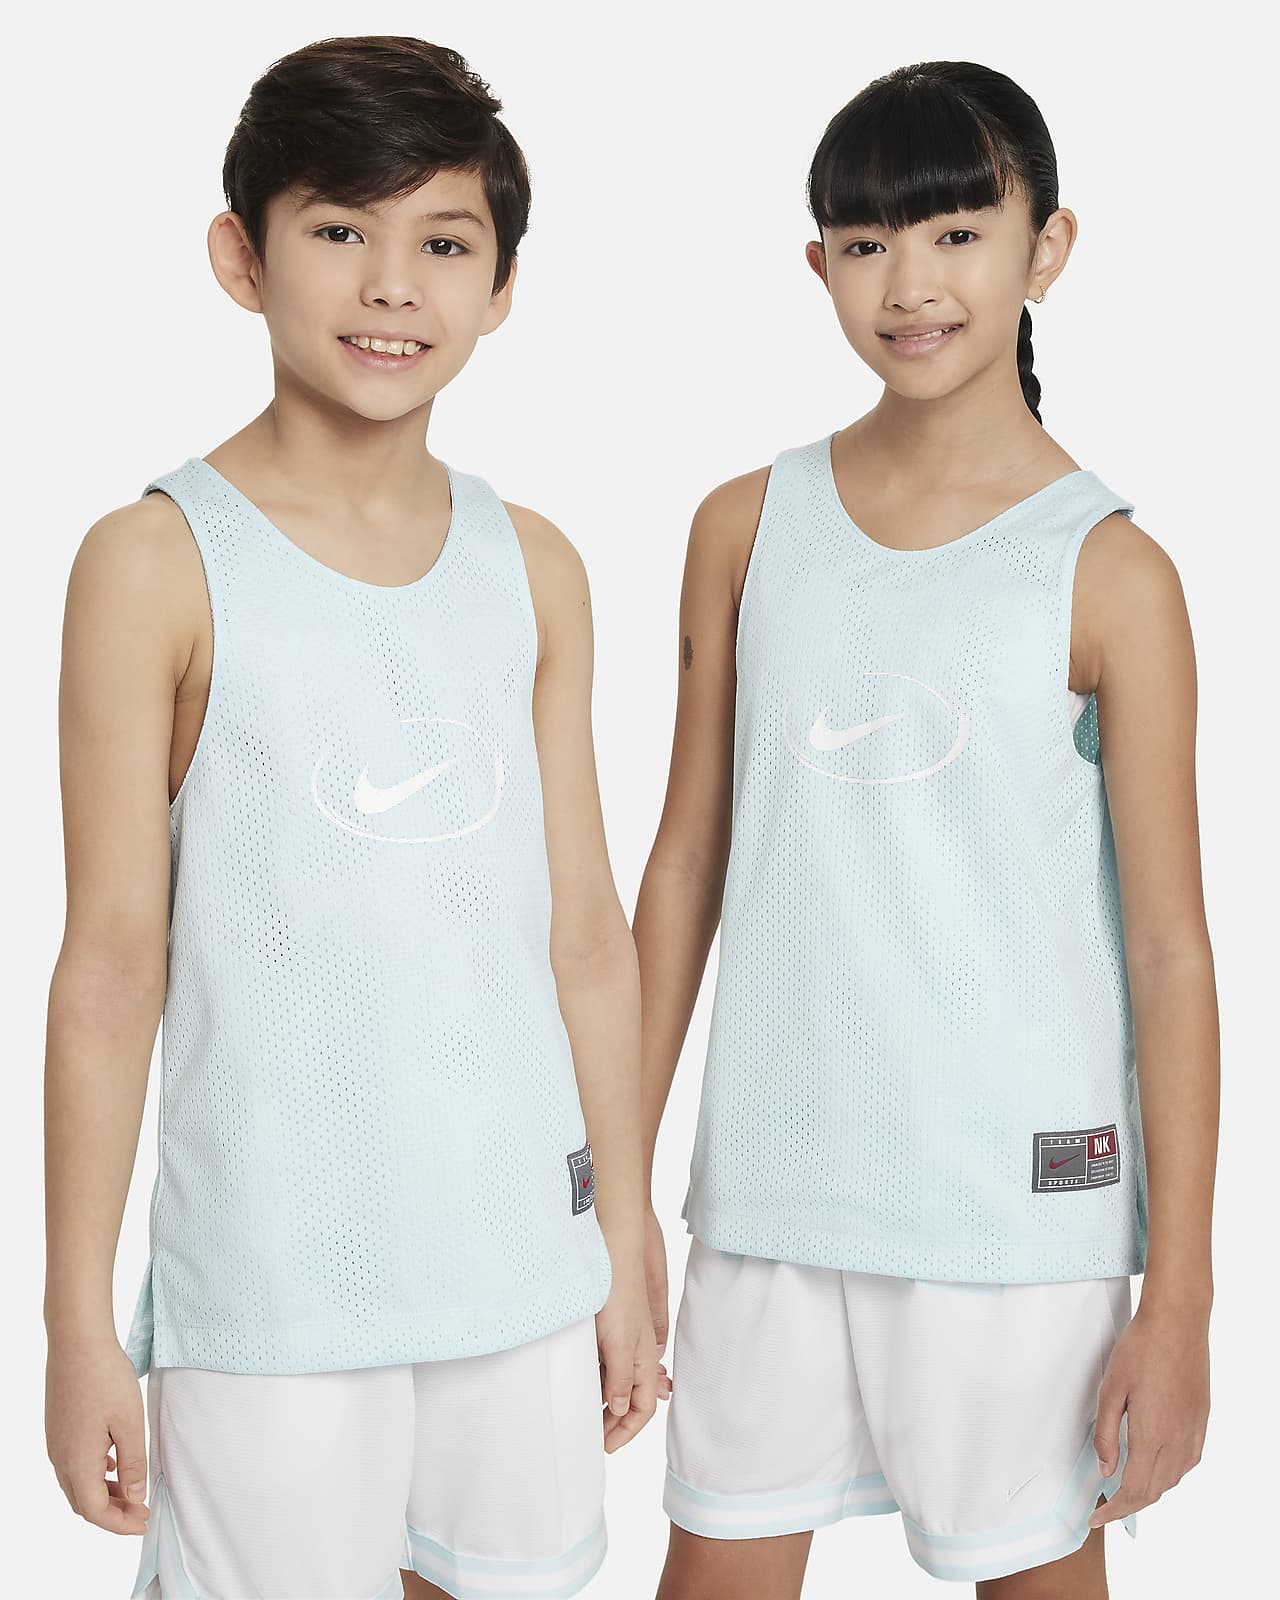 Nike Culture of Basketball Camiseta reversible - Niño/a